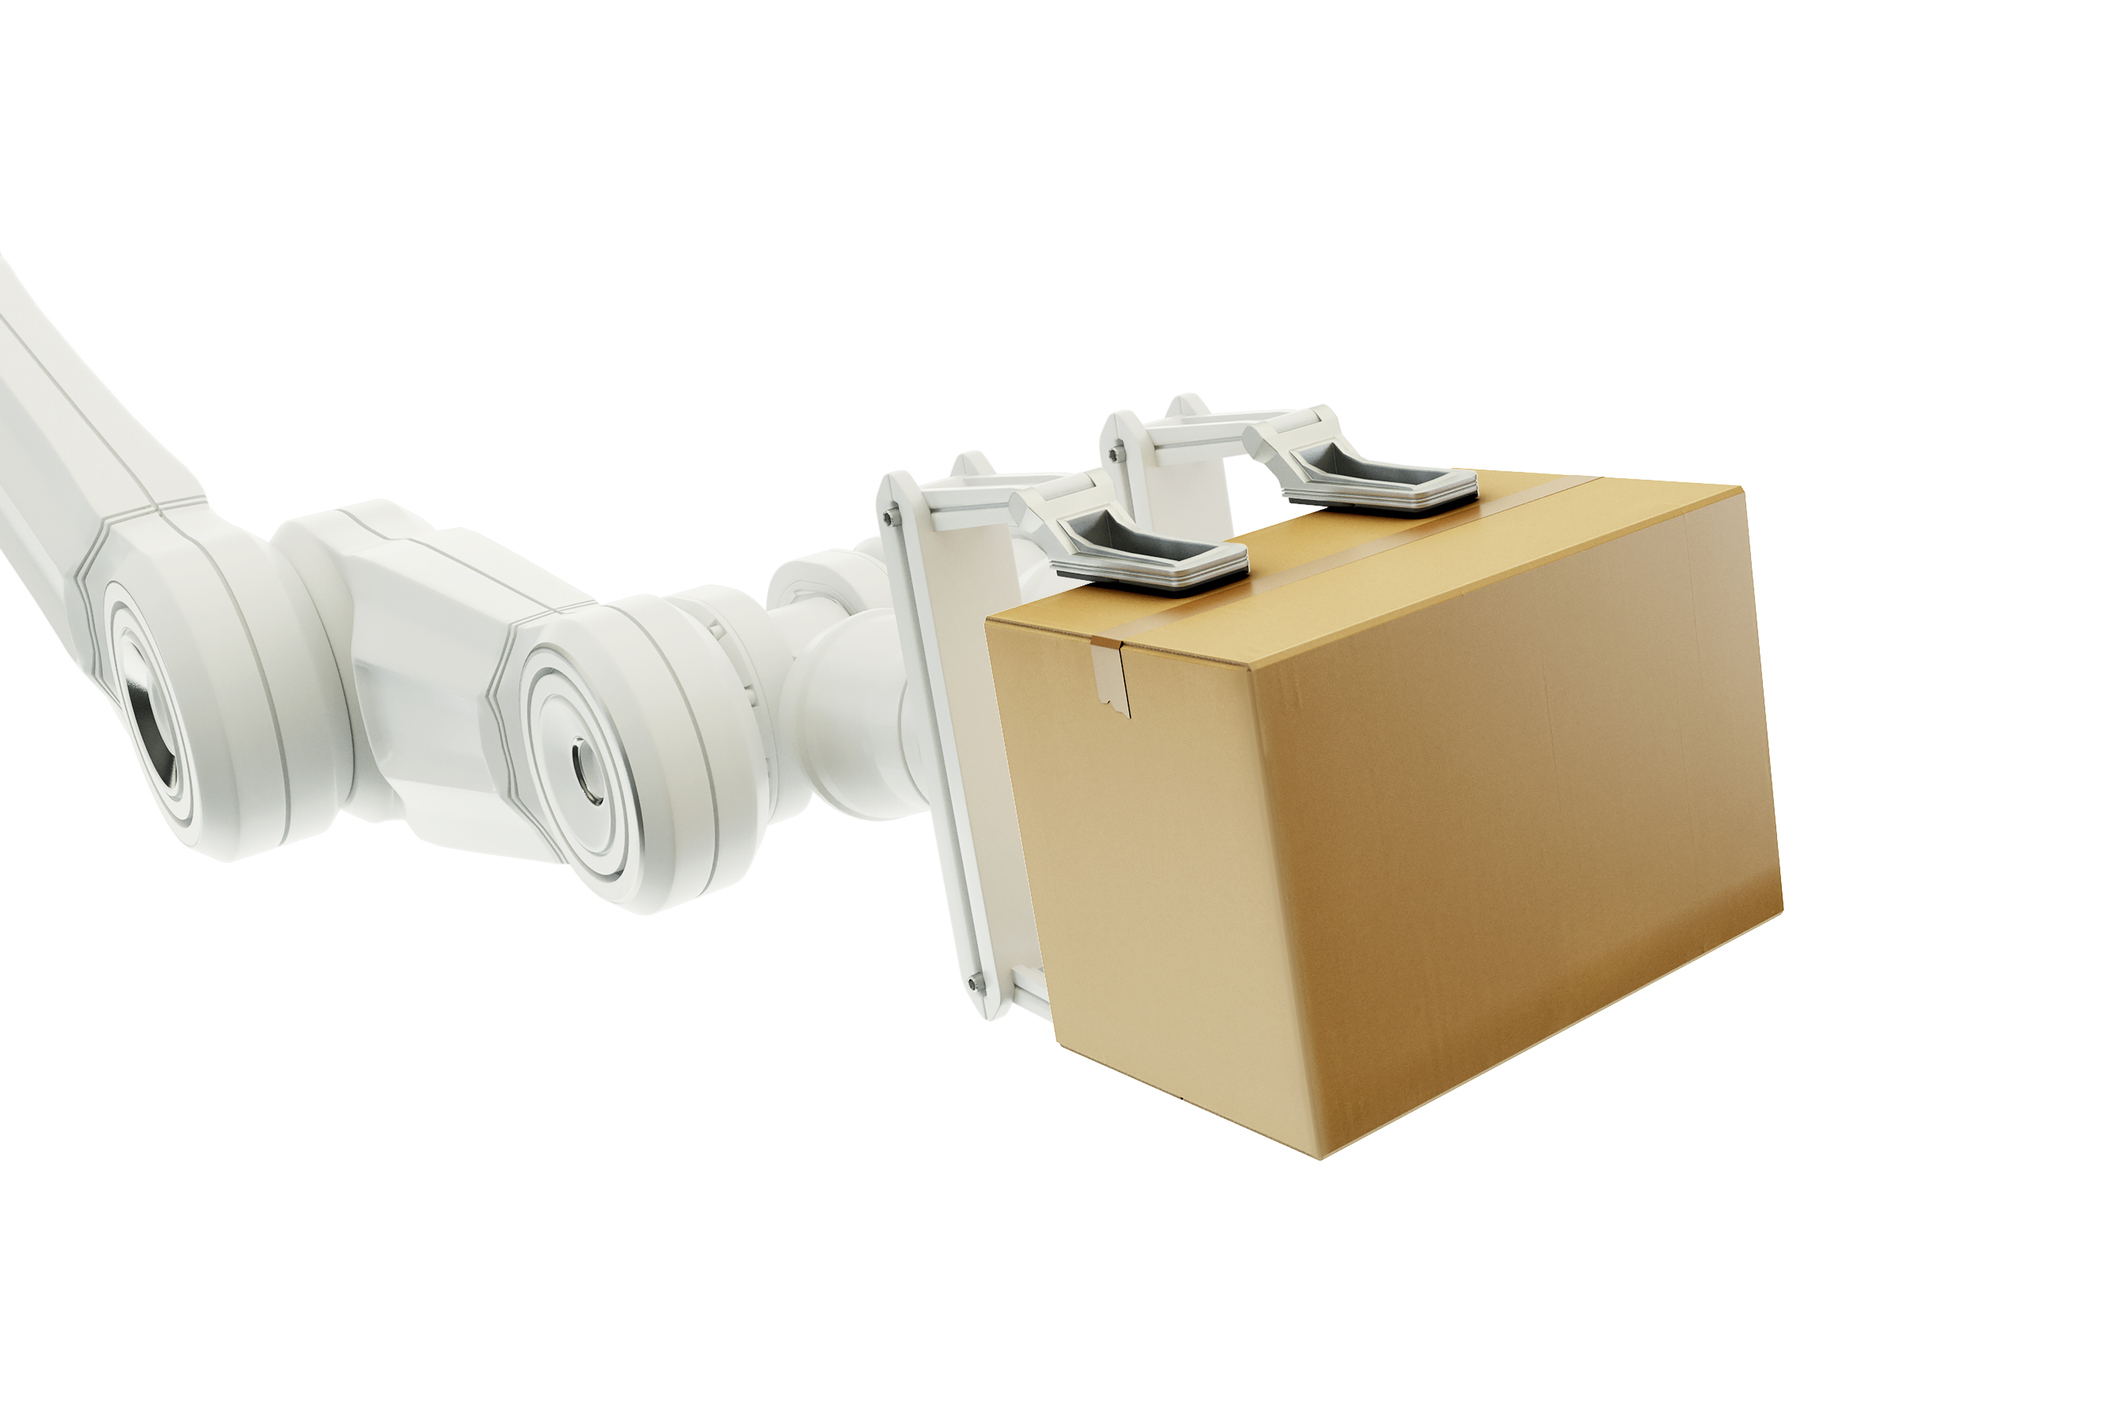 Robot arm holding a cardboard box